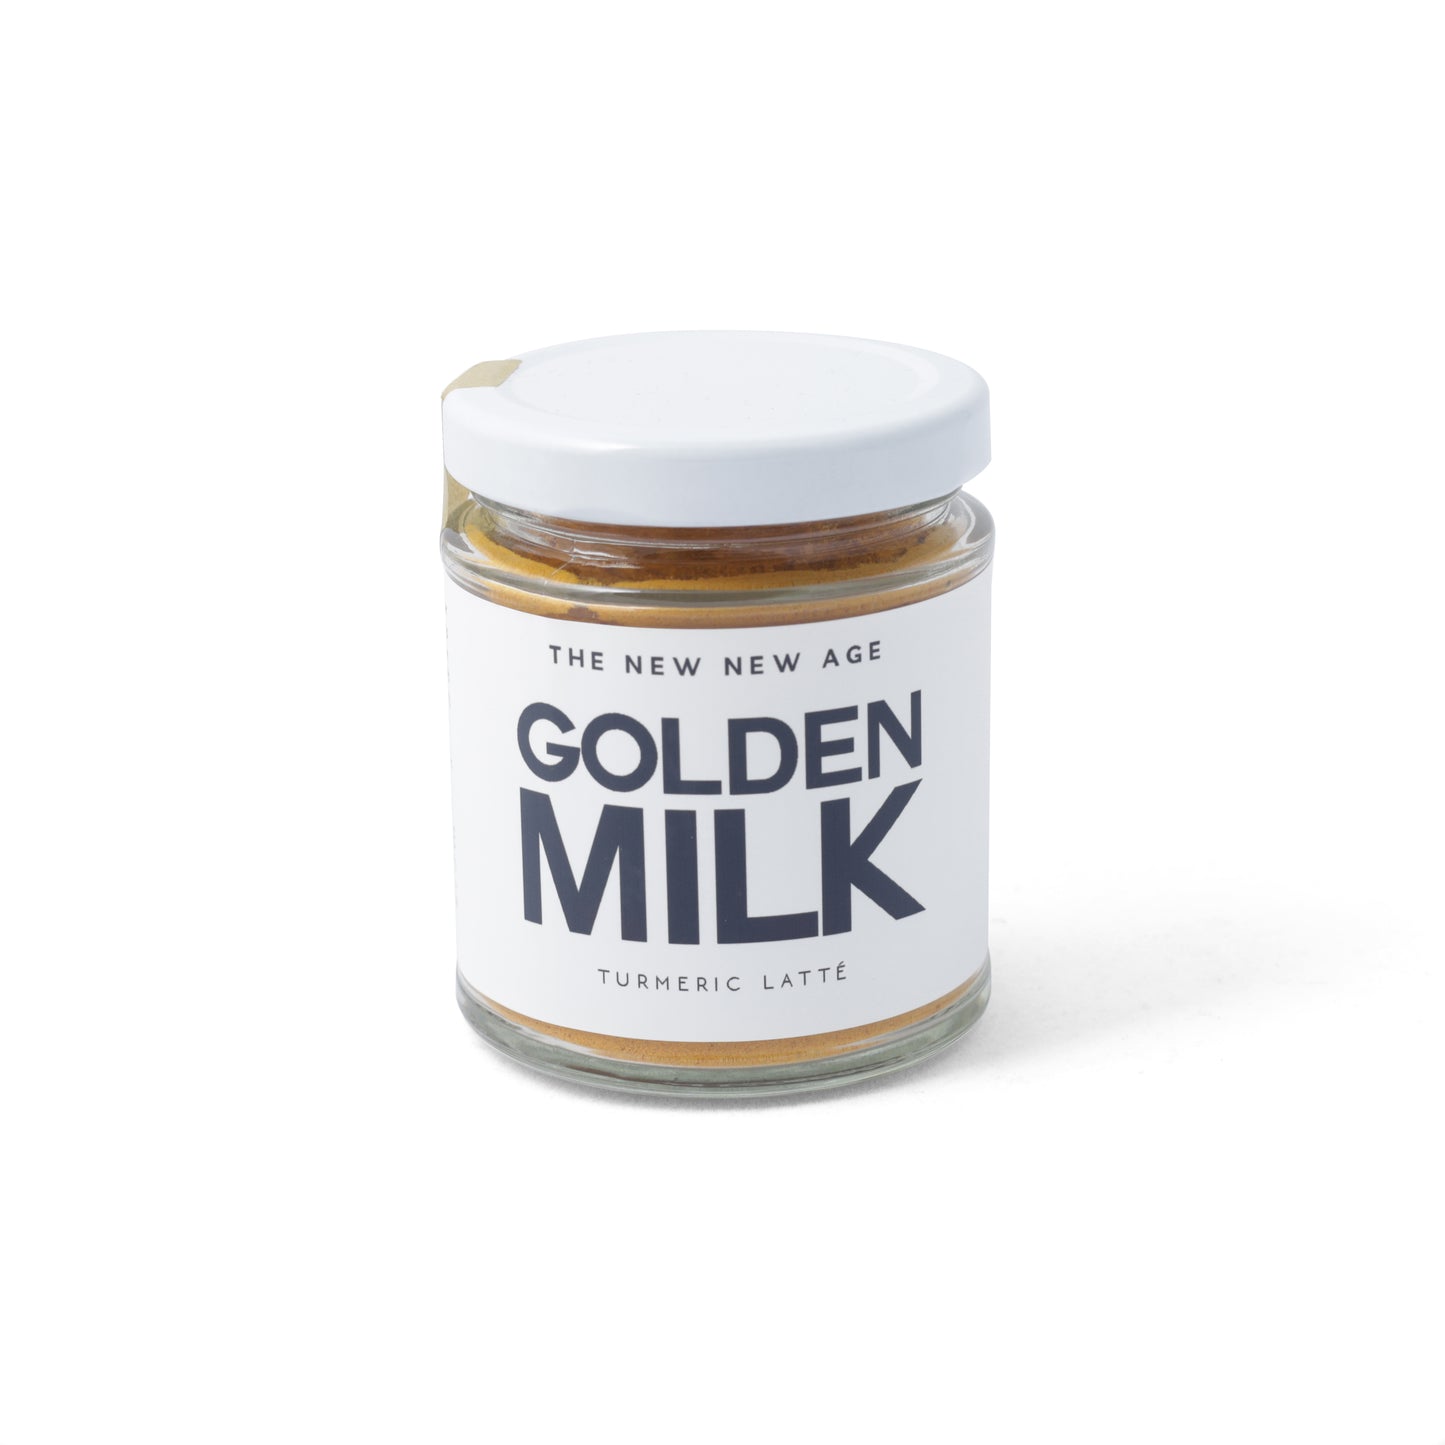 Golden Milk Tumeric Latte 80g